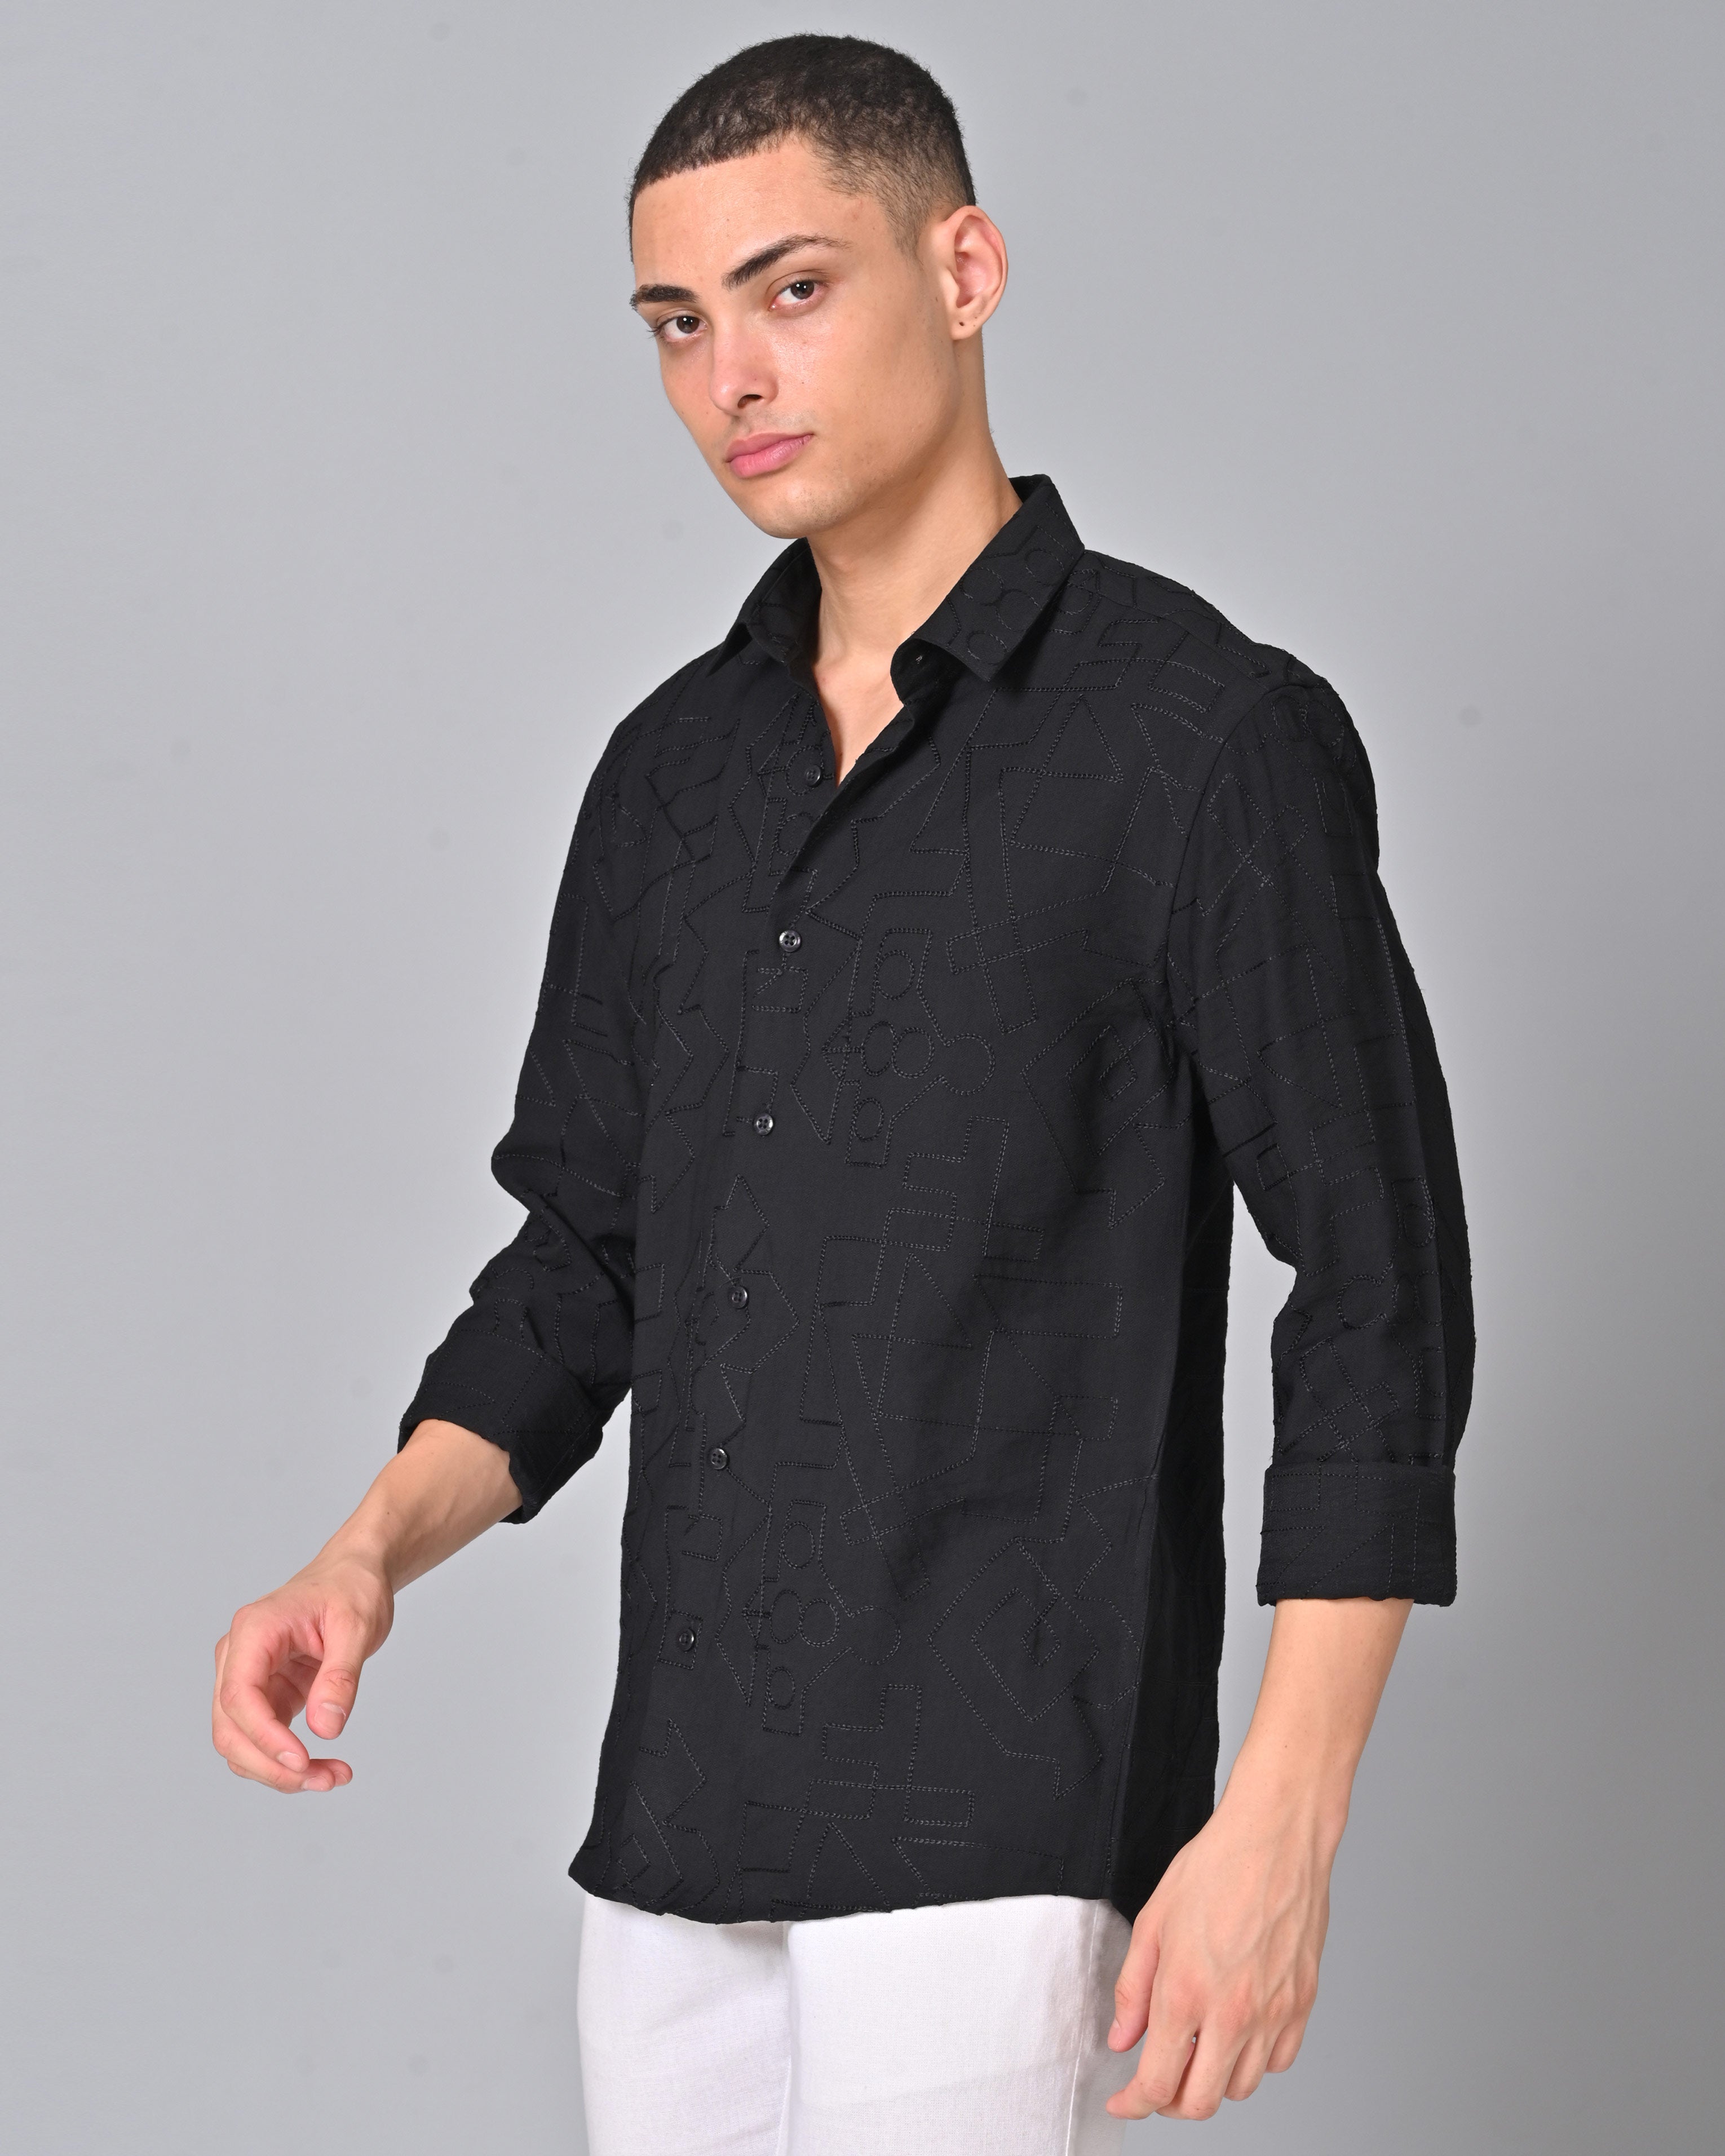 Men's Embroidered Cotton Black Shirt Online